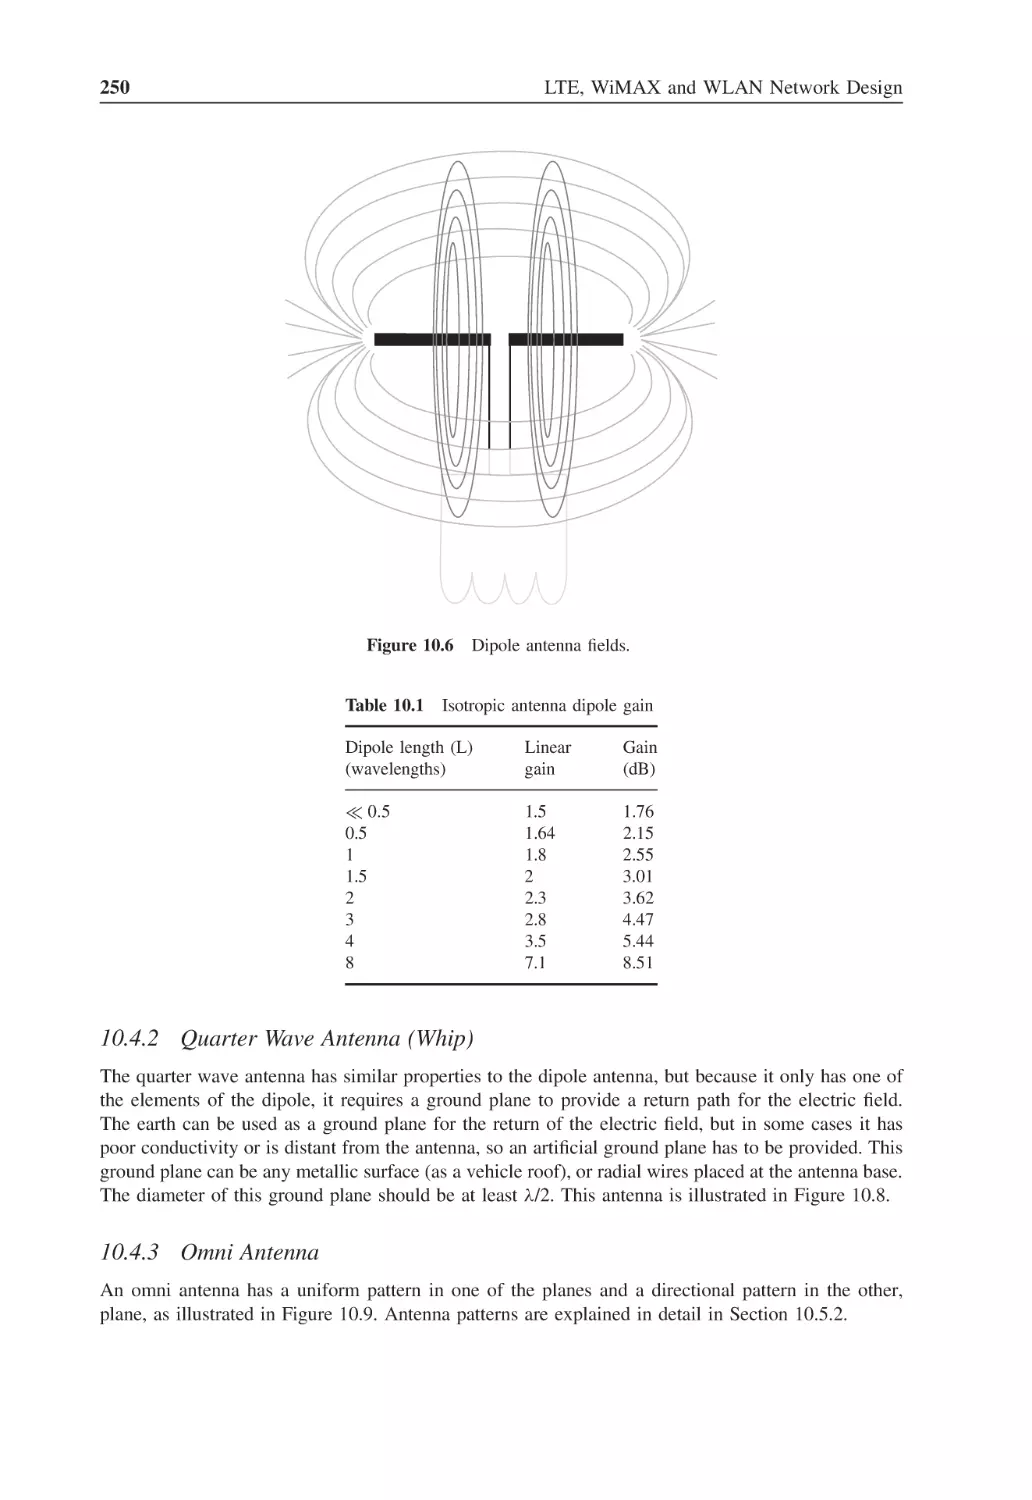 10.4.2 Quarter Wave Antenna (Whip)
10.4.3 Omni Antenna